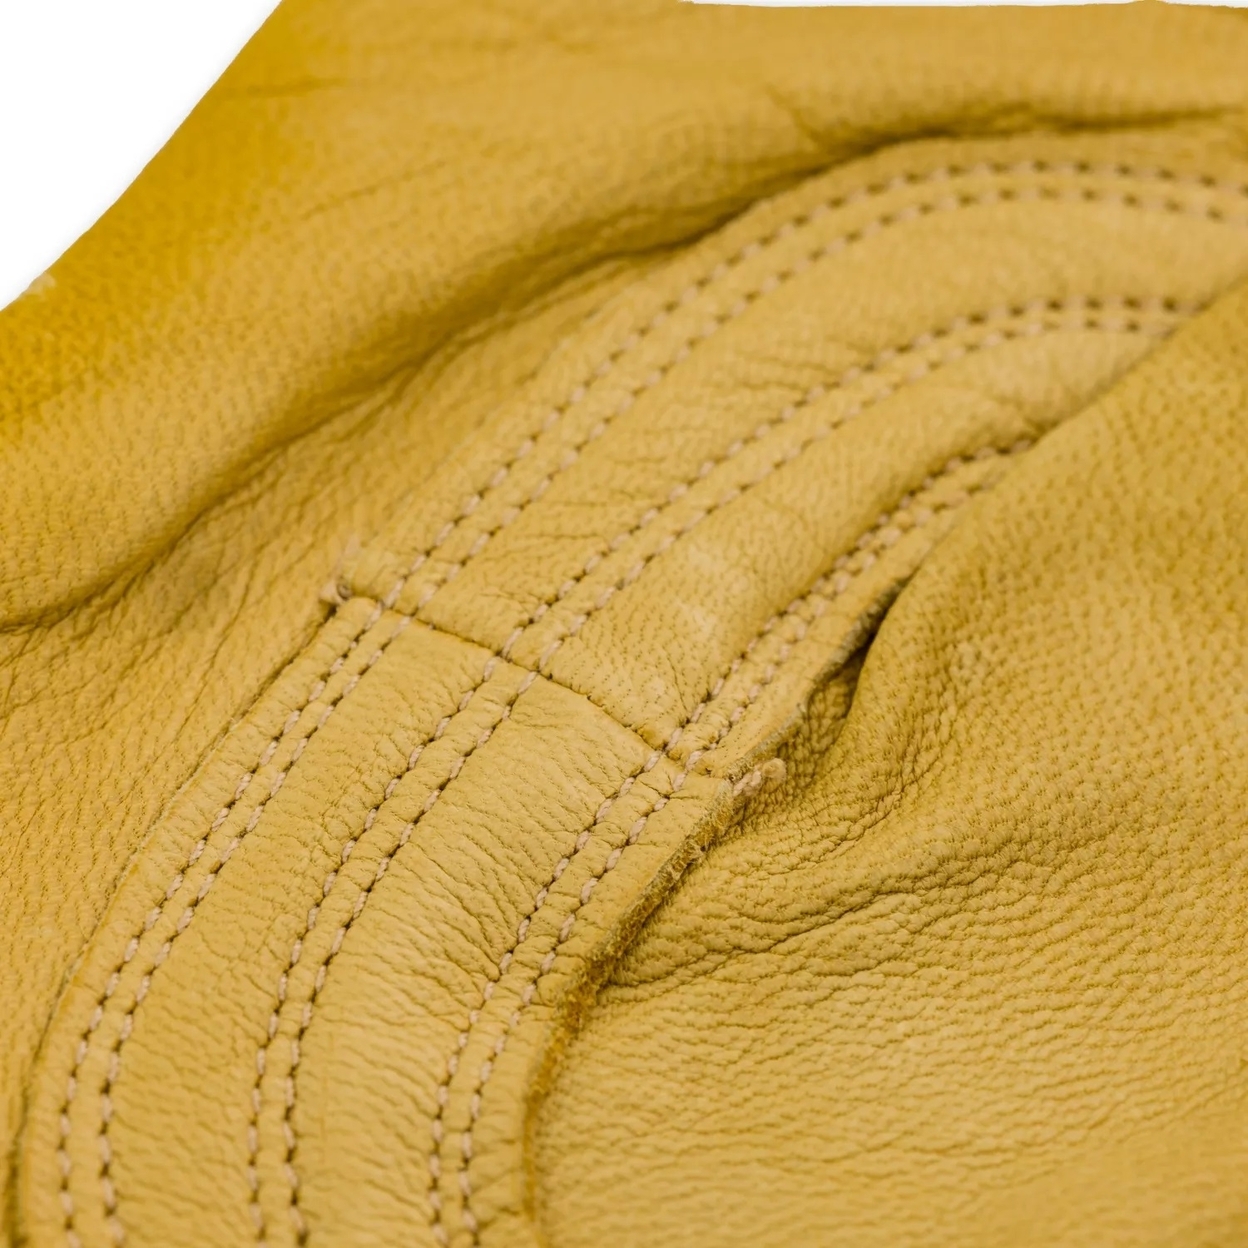 Plainsman Premium Cabretta Yellow Leather Gloves, 2 Pairs (Small)